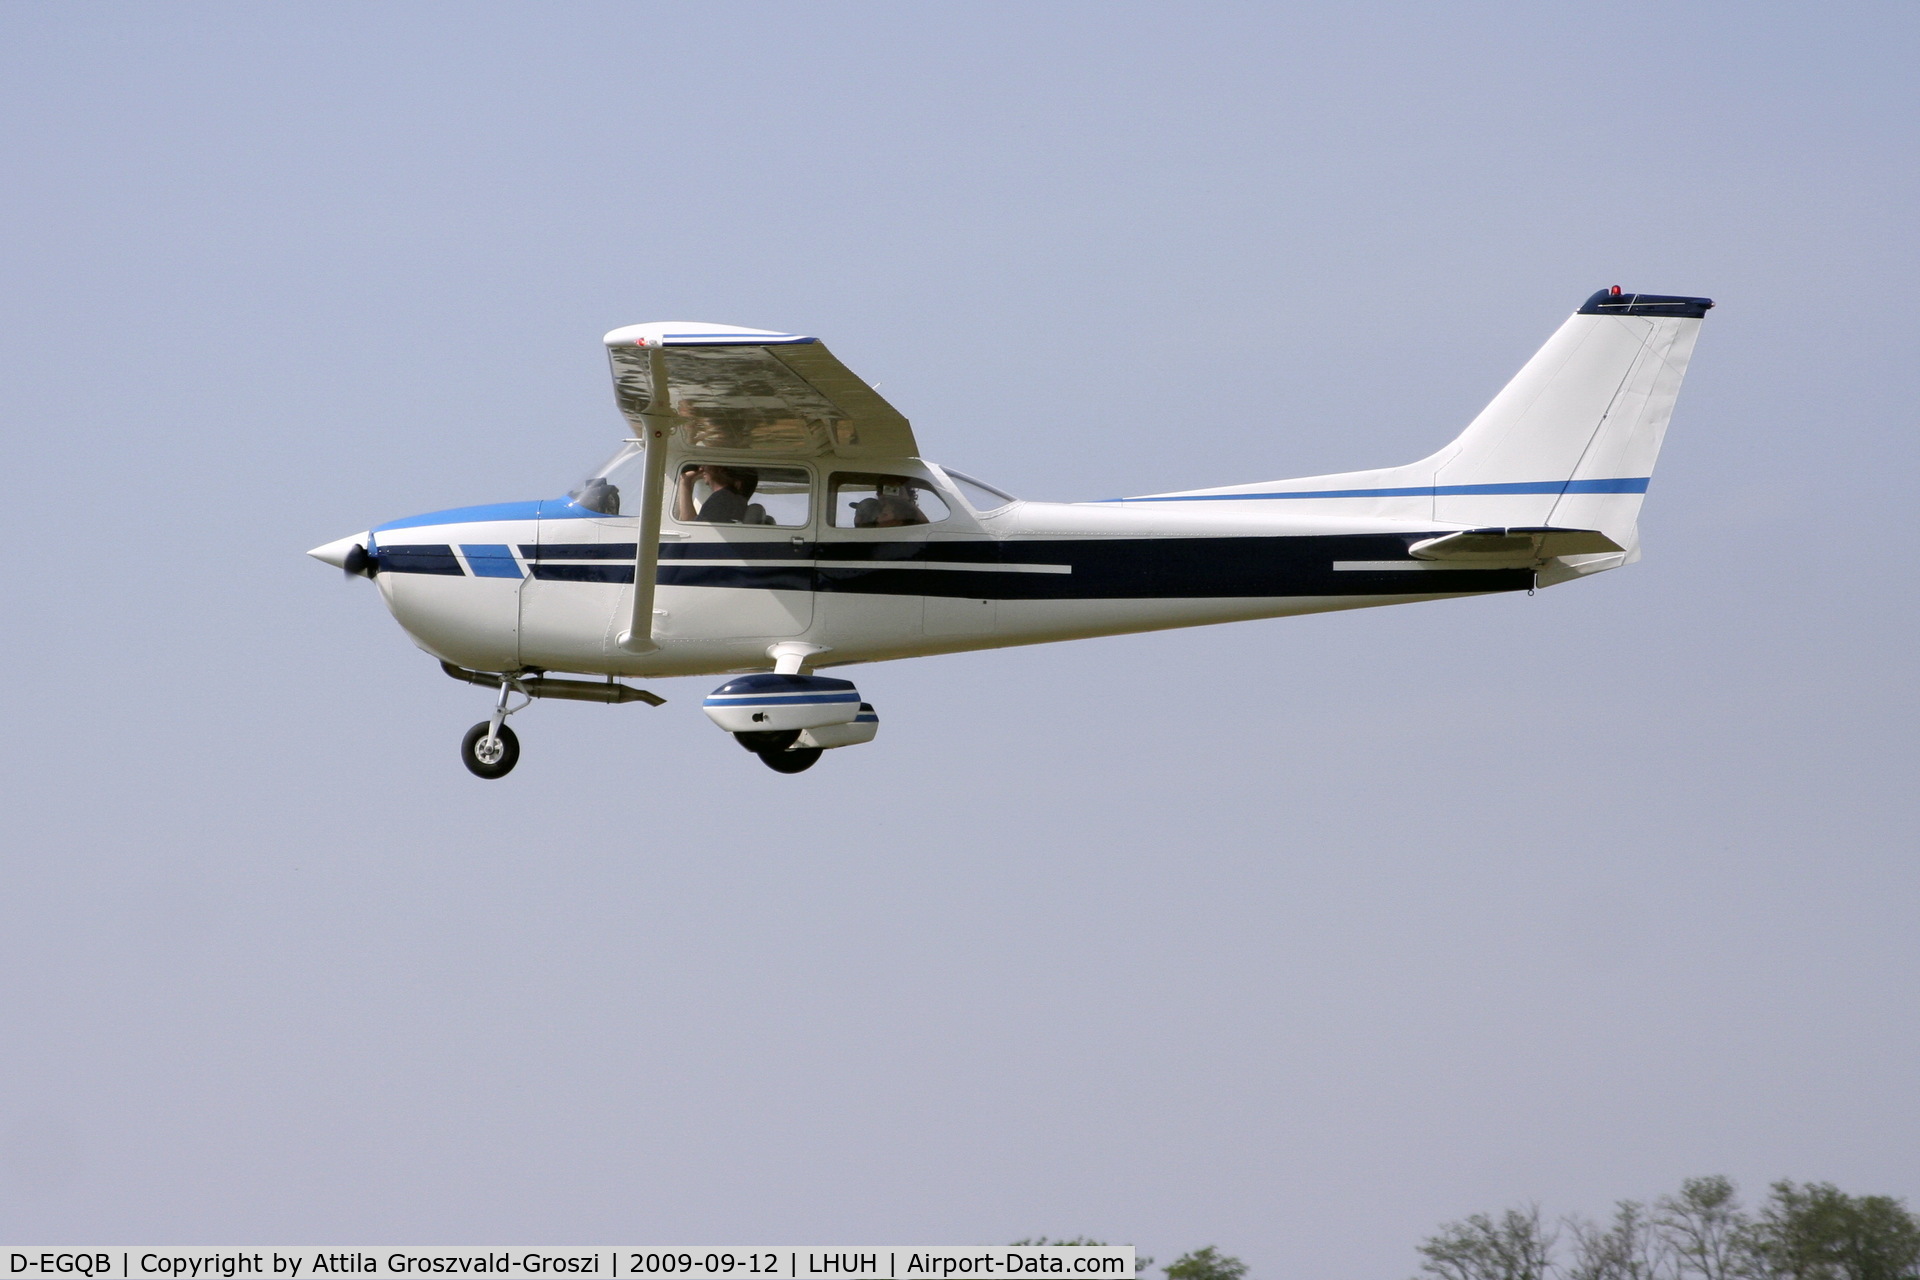 D-EGQB, 1977 Reims F172N Skyhawk Skyhawk C/N 1638, LHUH - Urhida Airport, Hungary. He no longer has a German registration, but is not yet registered in Hungary